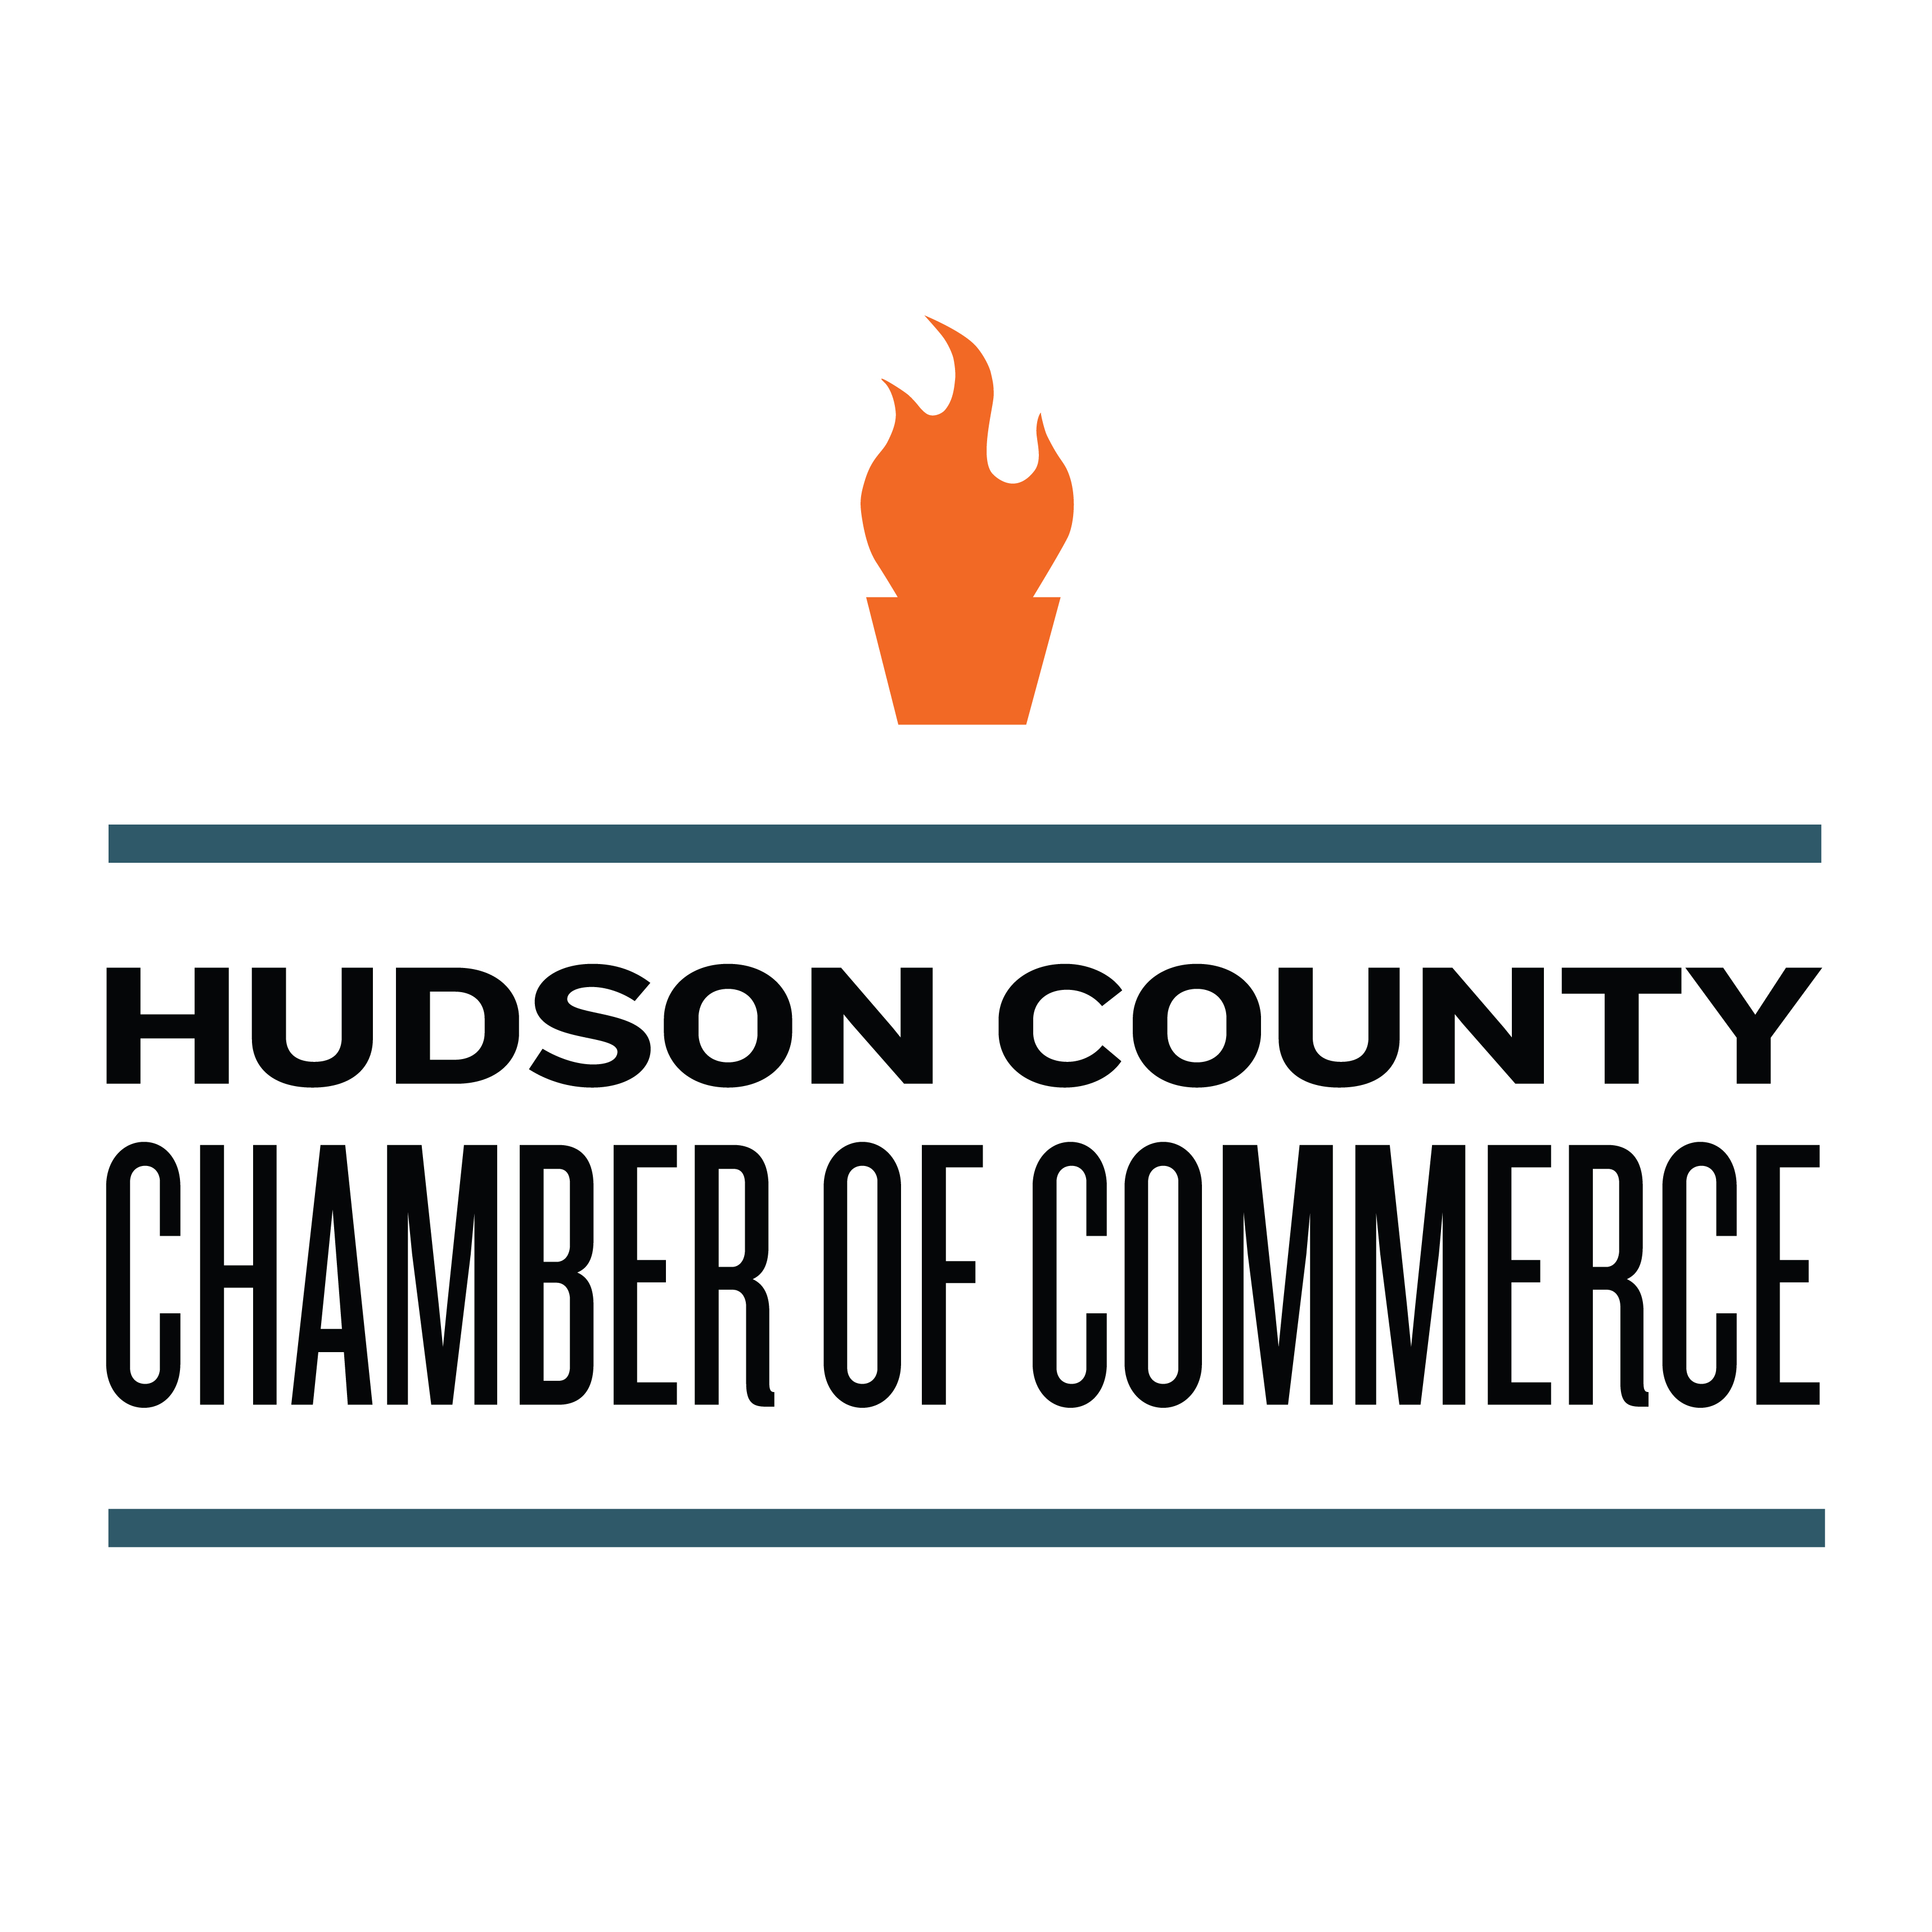 Hudson County Chamber of Commerce